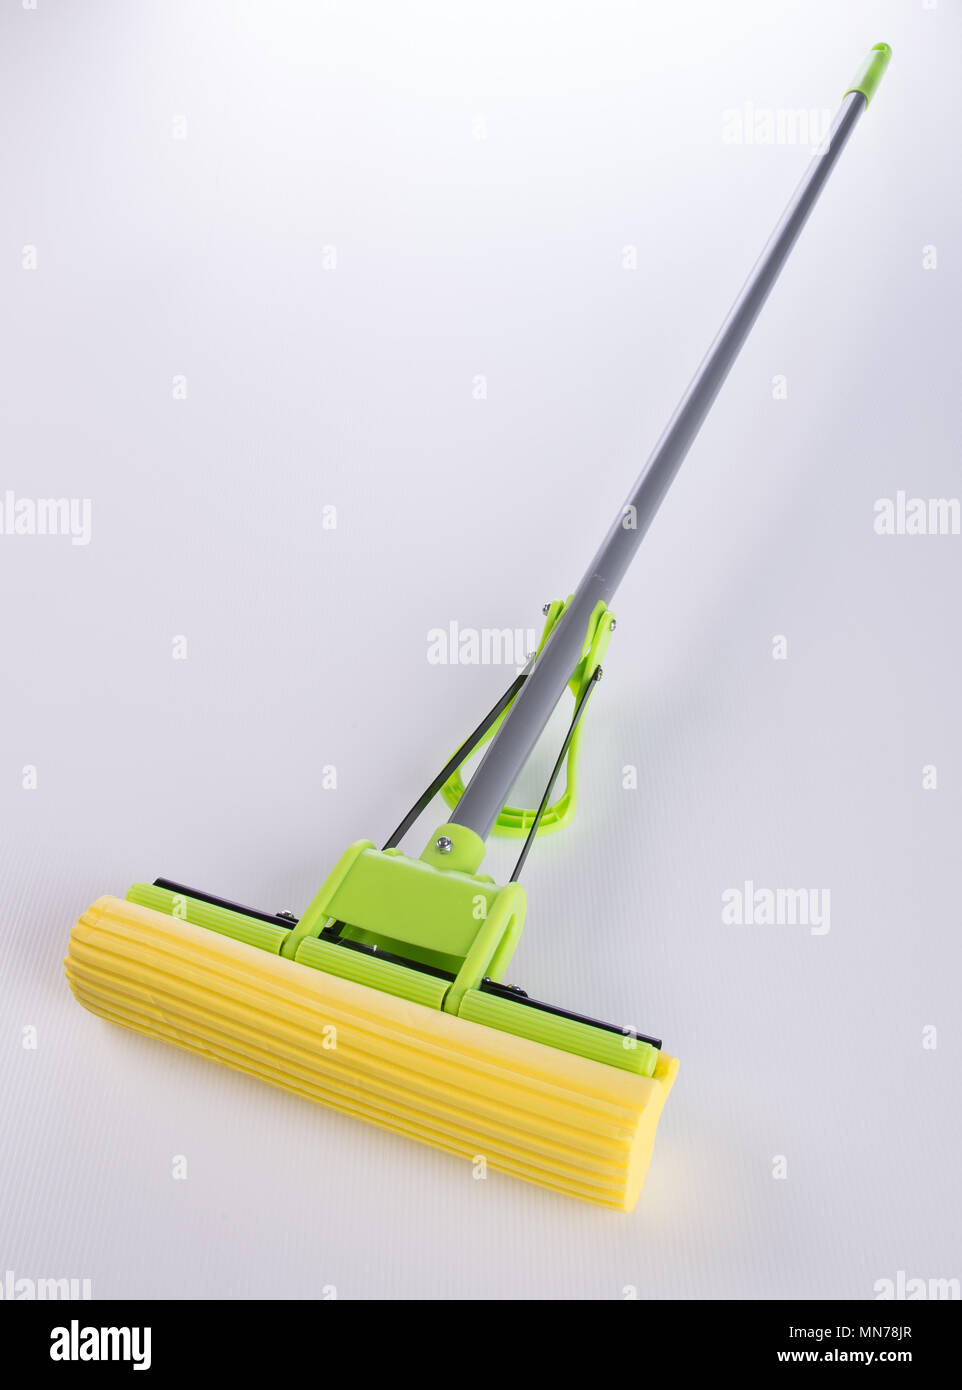 https://c8.alamy.com/comp/MN78JR/mop-or-plastic-mop-with-aluminum-handle-MN78JR.jpg